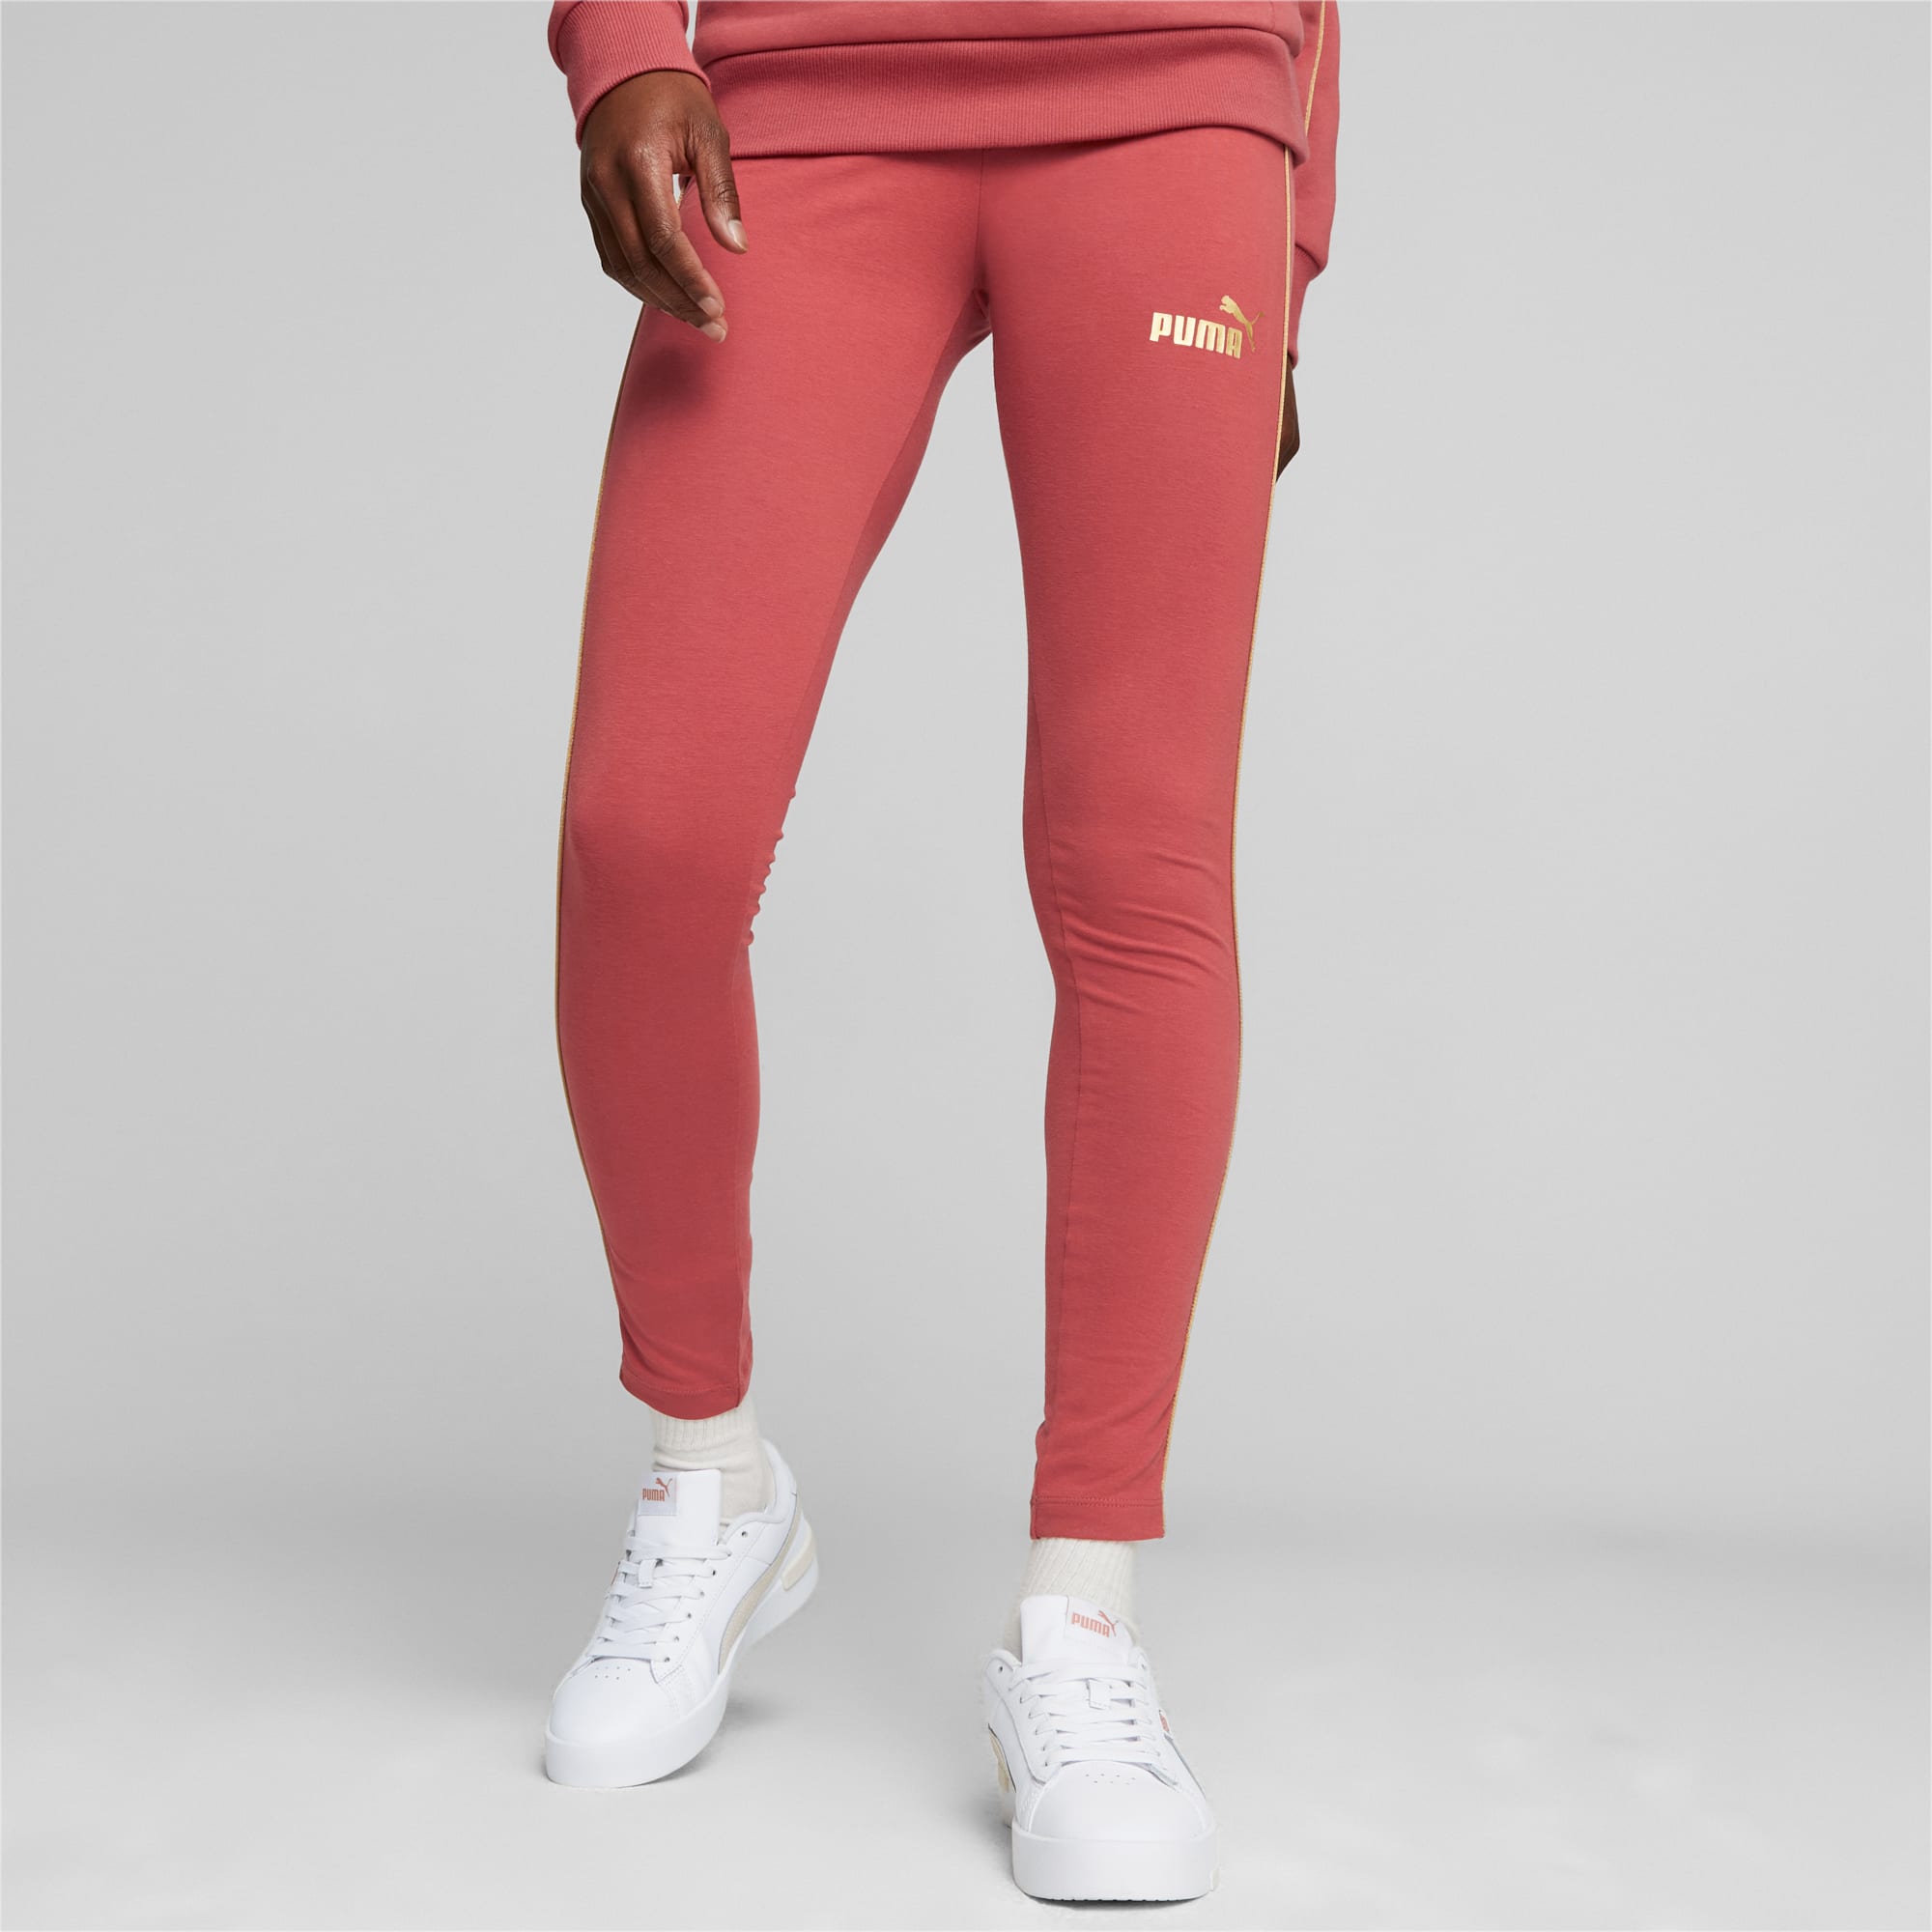 PUMA Ess+ Minimal Gold Women's Leggings, Astro Red, Size XL, Clothing